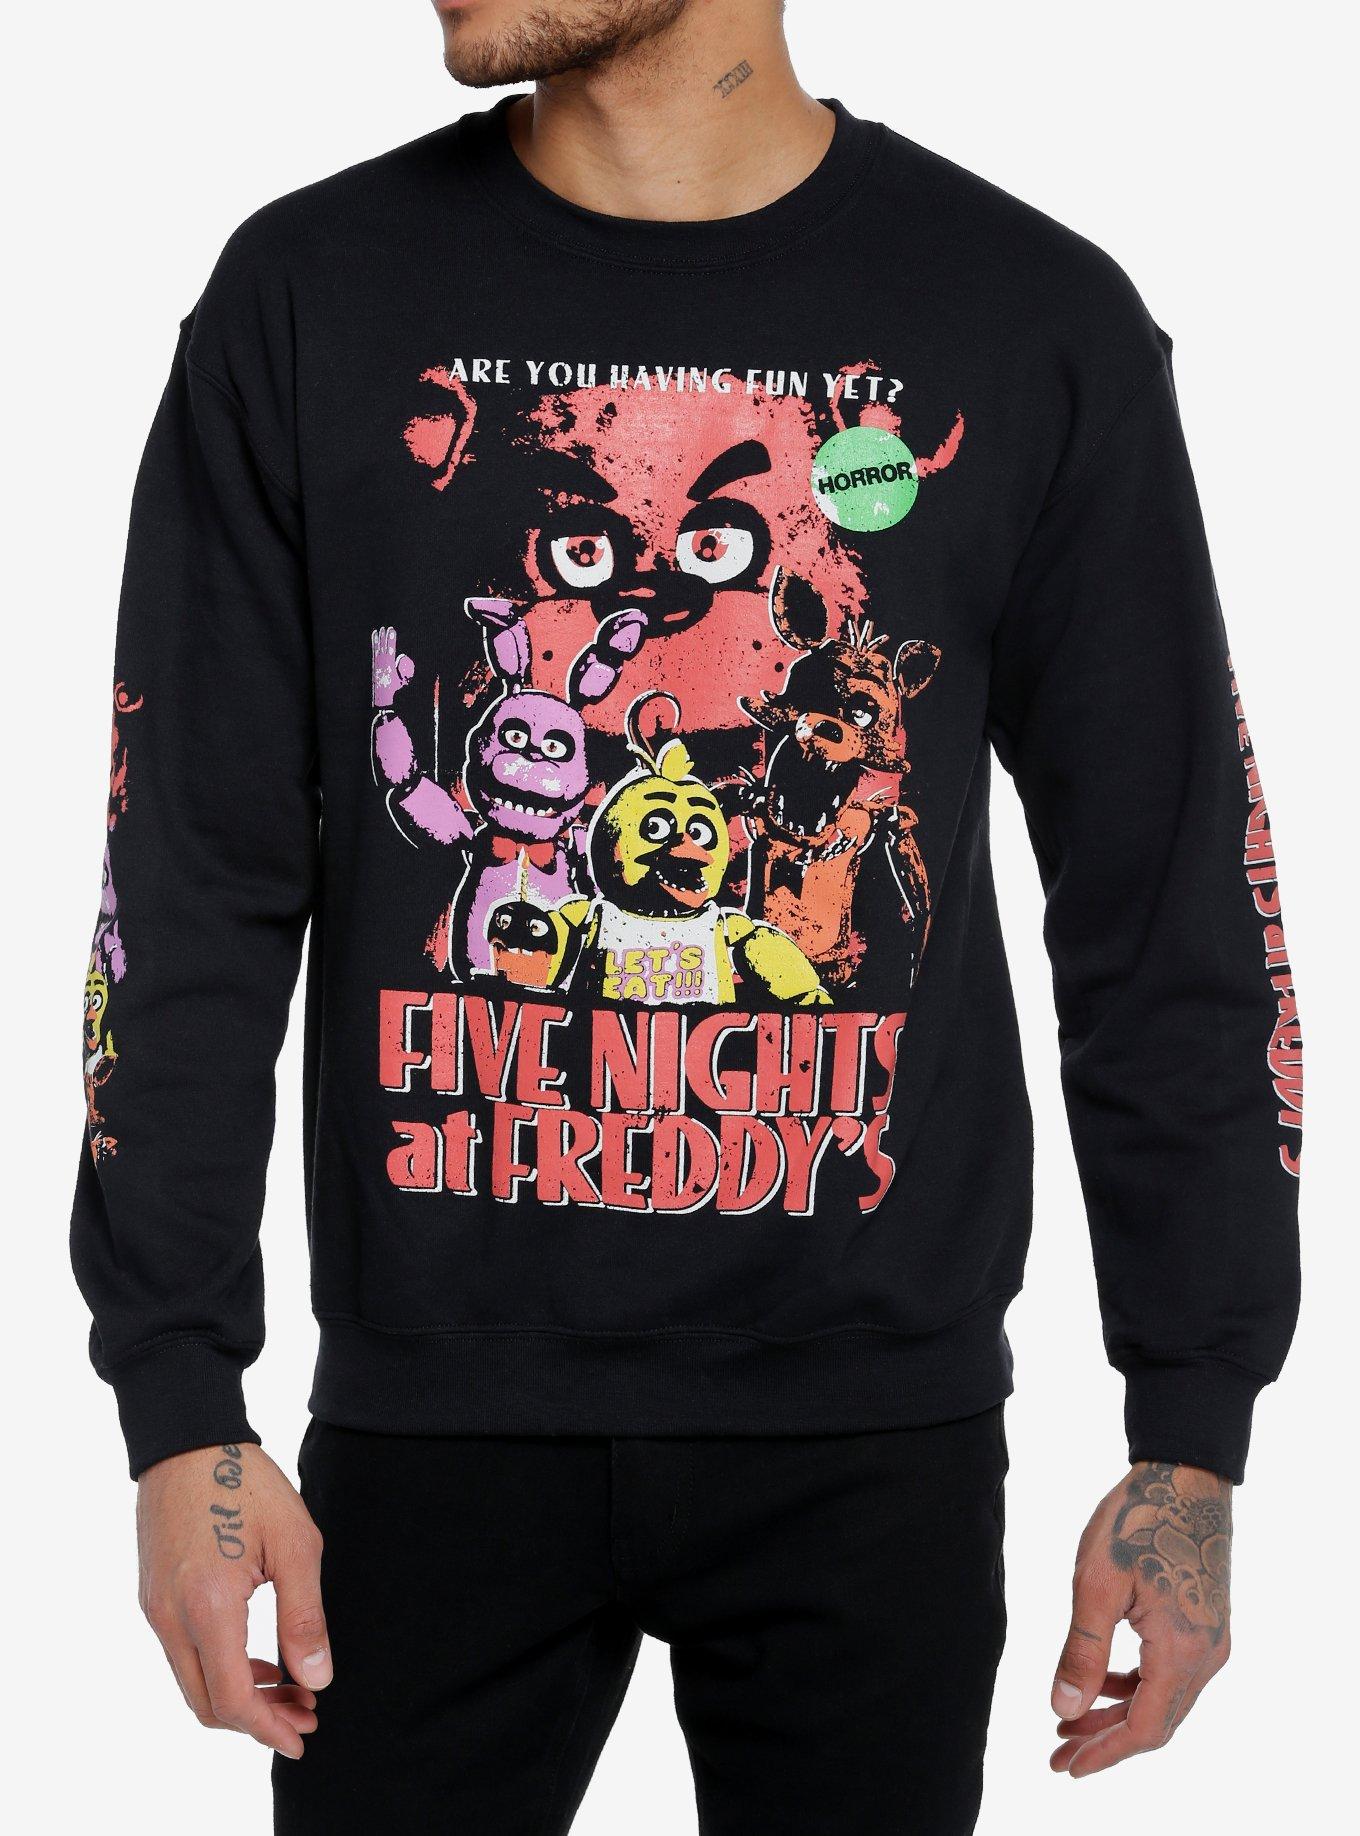 Freddy women's sweatshirts & hoodies for ladies: online store Comfort Fit